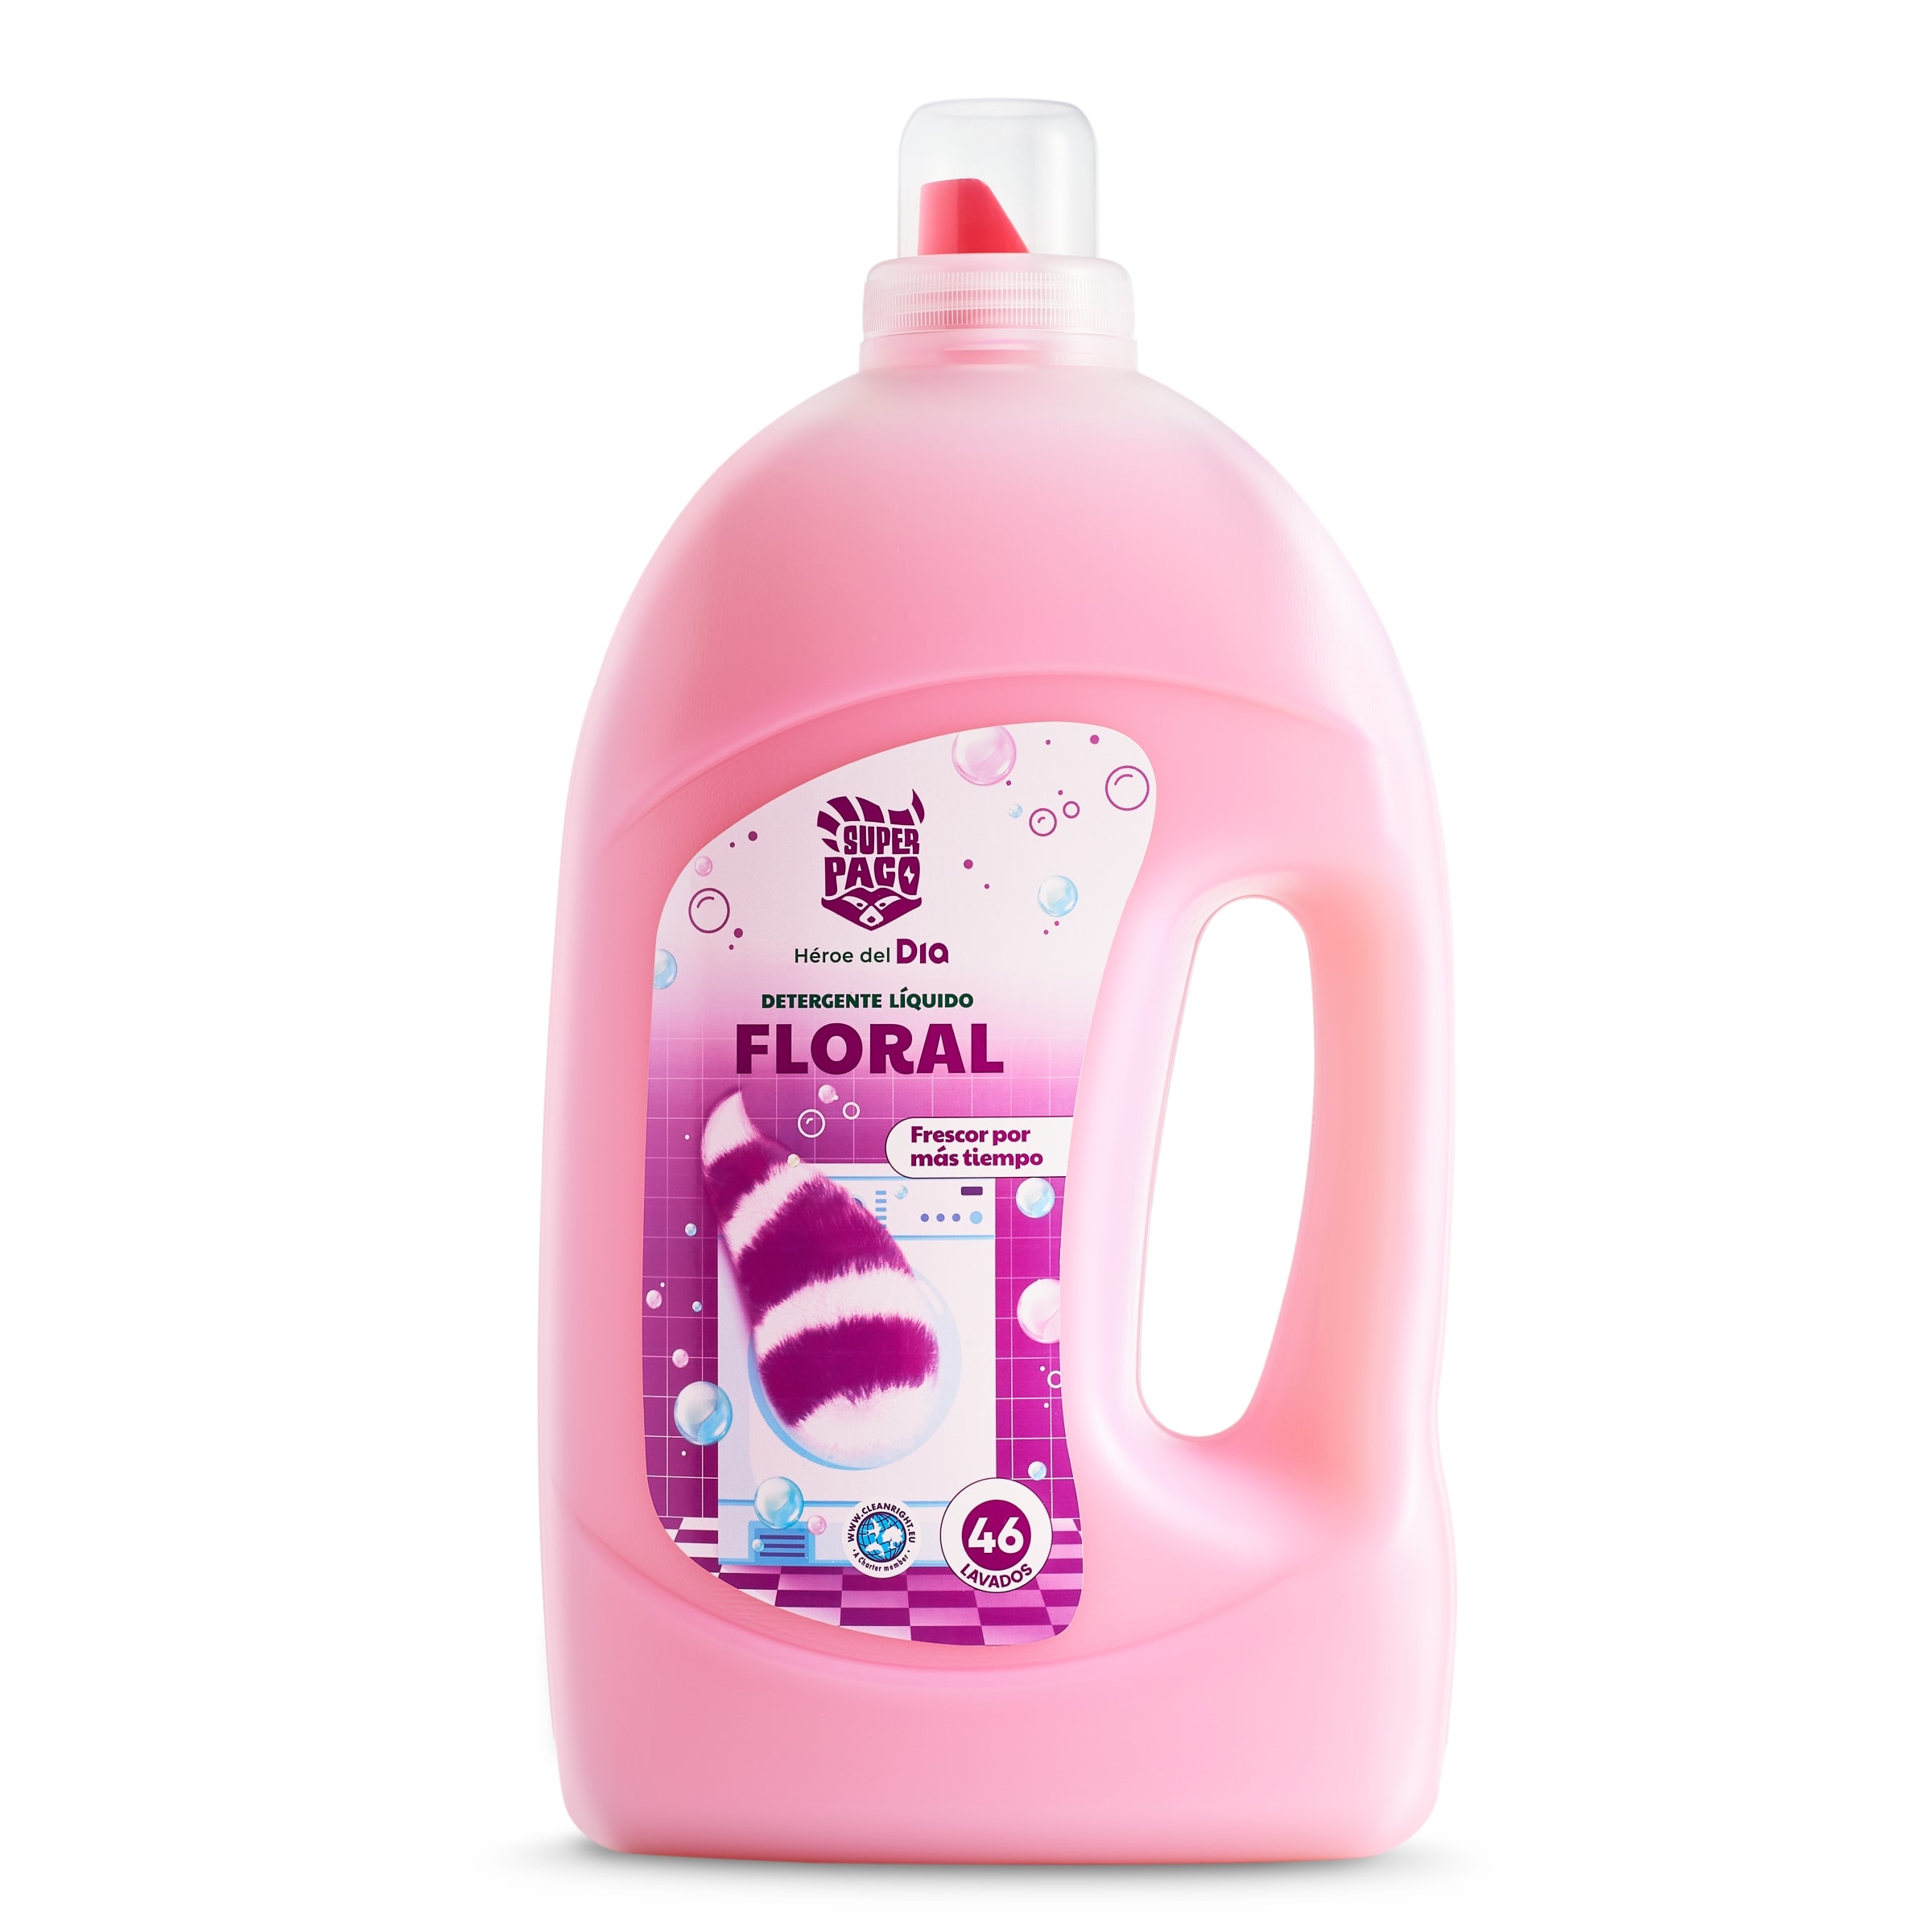 Detergente máquina líquido color Super Paco botella 46 lavados -  Supermercados DIA